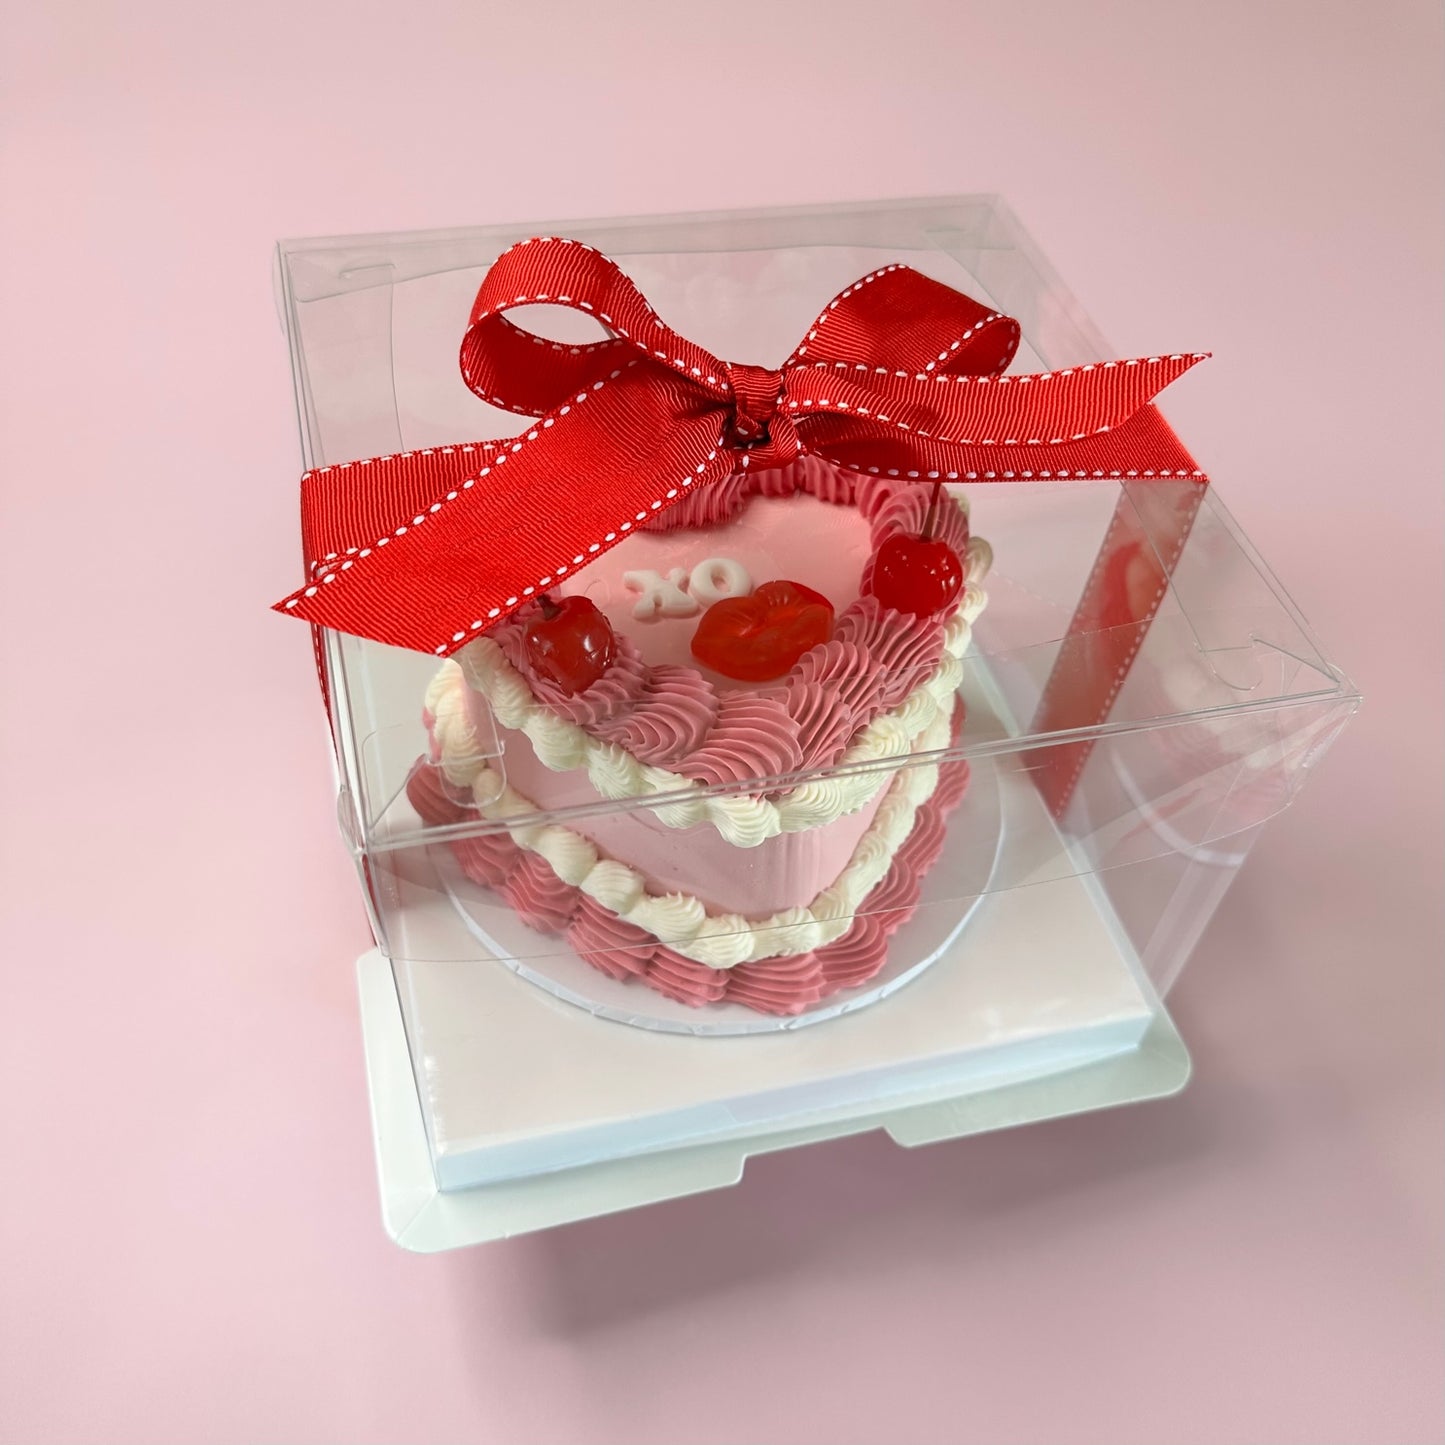 Retro Love - Mini Vintage Heart Cake